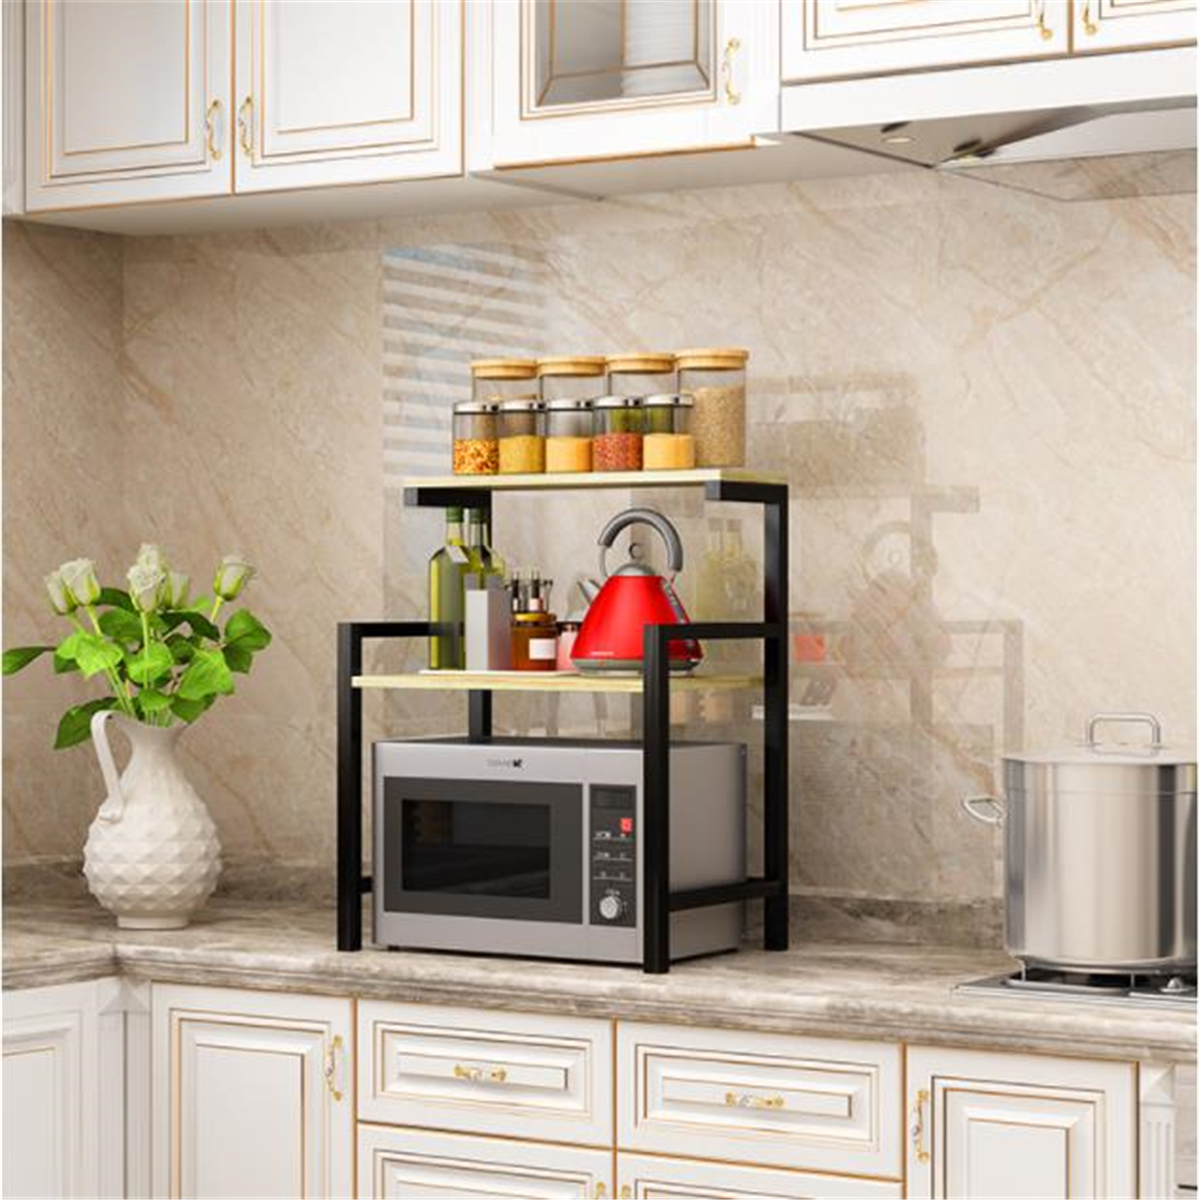 Double-Layer-Microwave-Oven-Shelf-Rack-Kitchen-Storage-Holders-Bath-Shelf-Home-Office-Shelf-Organize-1763047-8